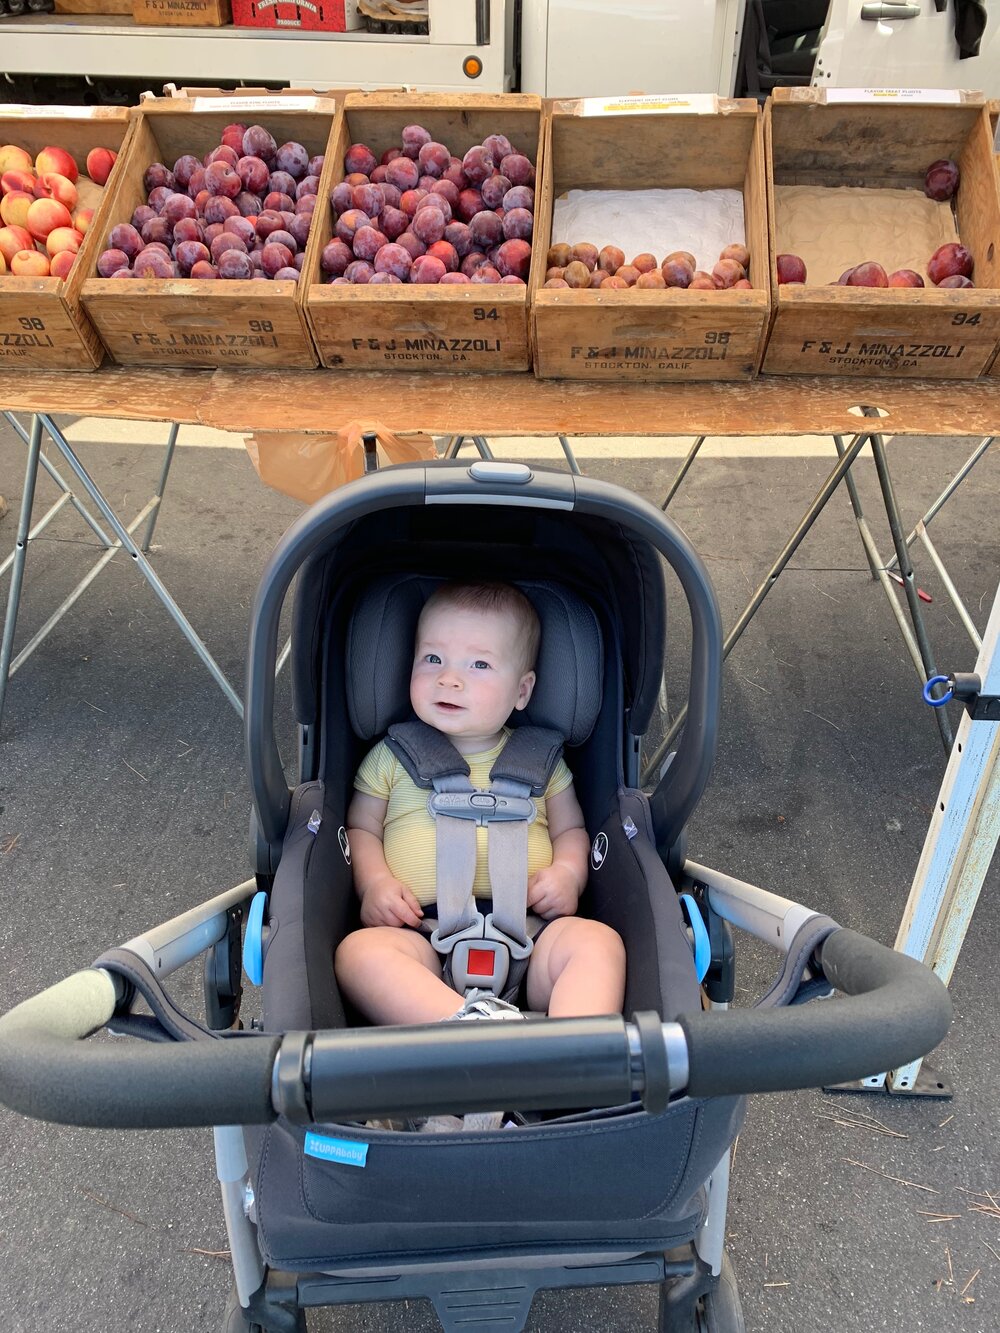 My farmer’s market shopping cart!